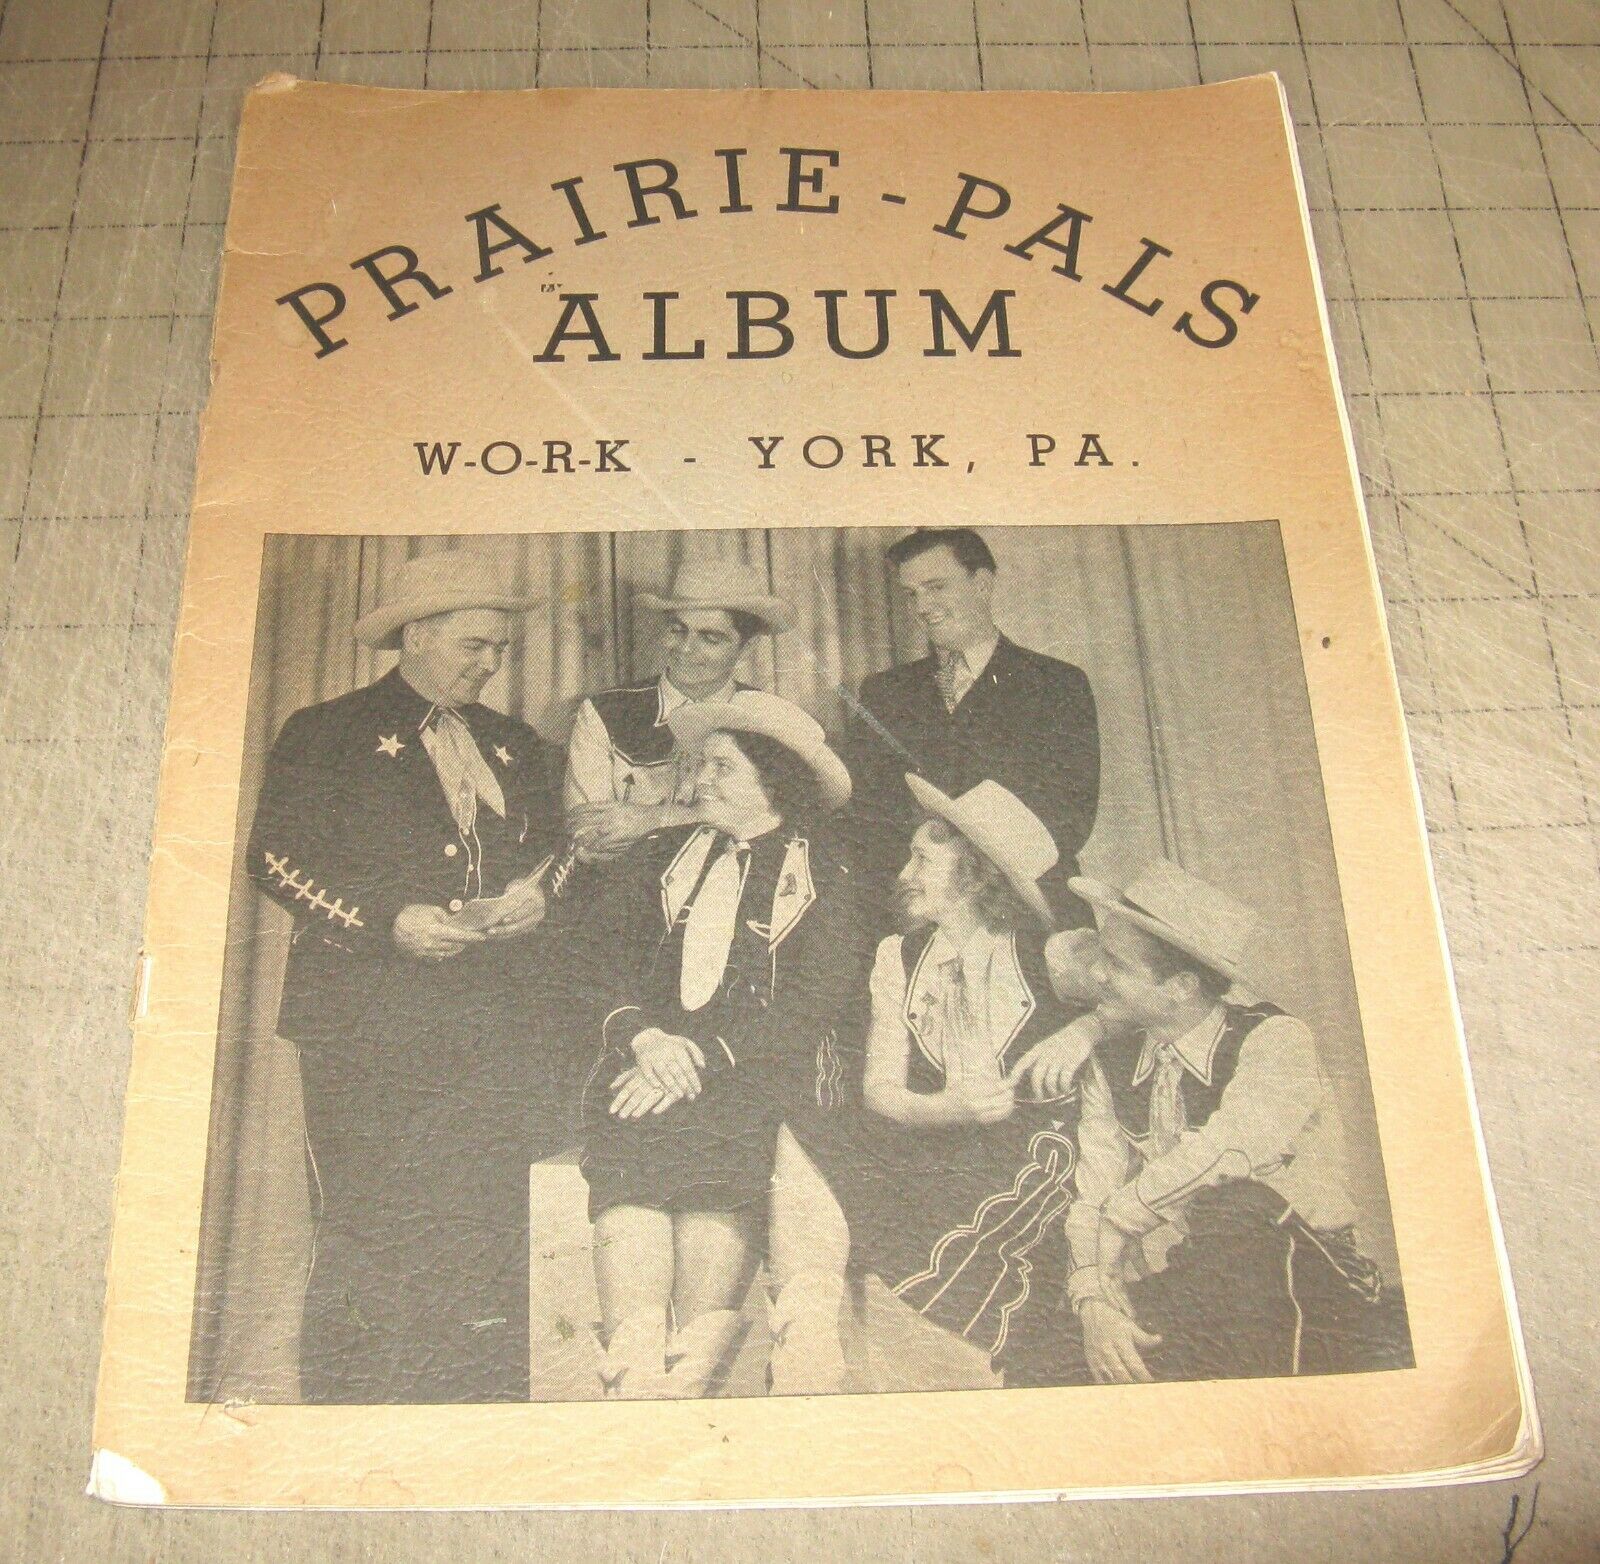 1940's PRAIRE-PALS ALBUM - W.O.R.K. Radio Show Program - York, Pennsylvania